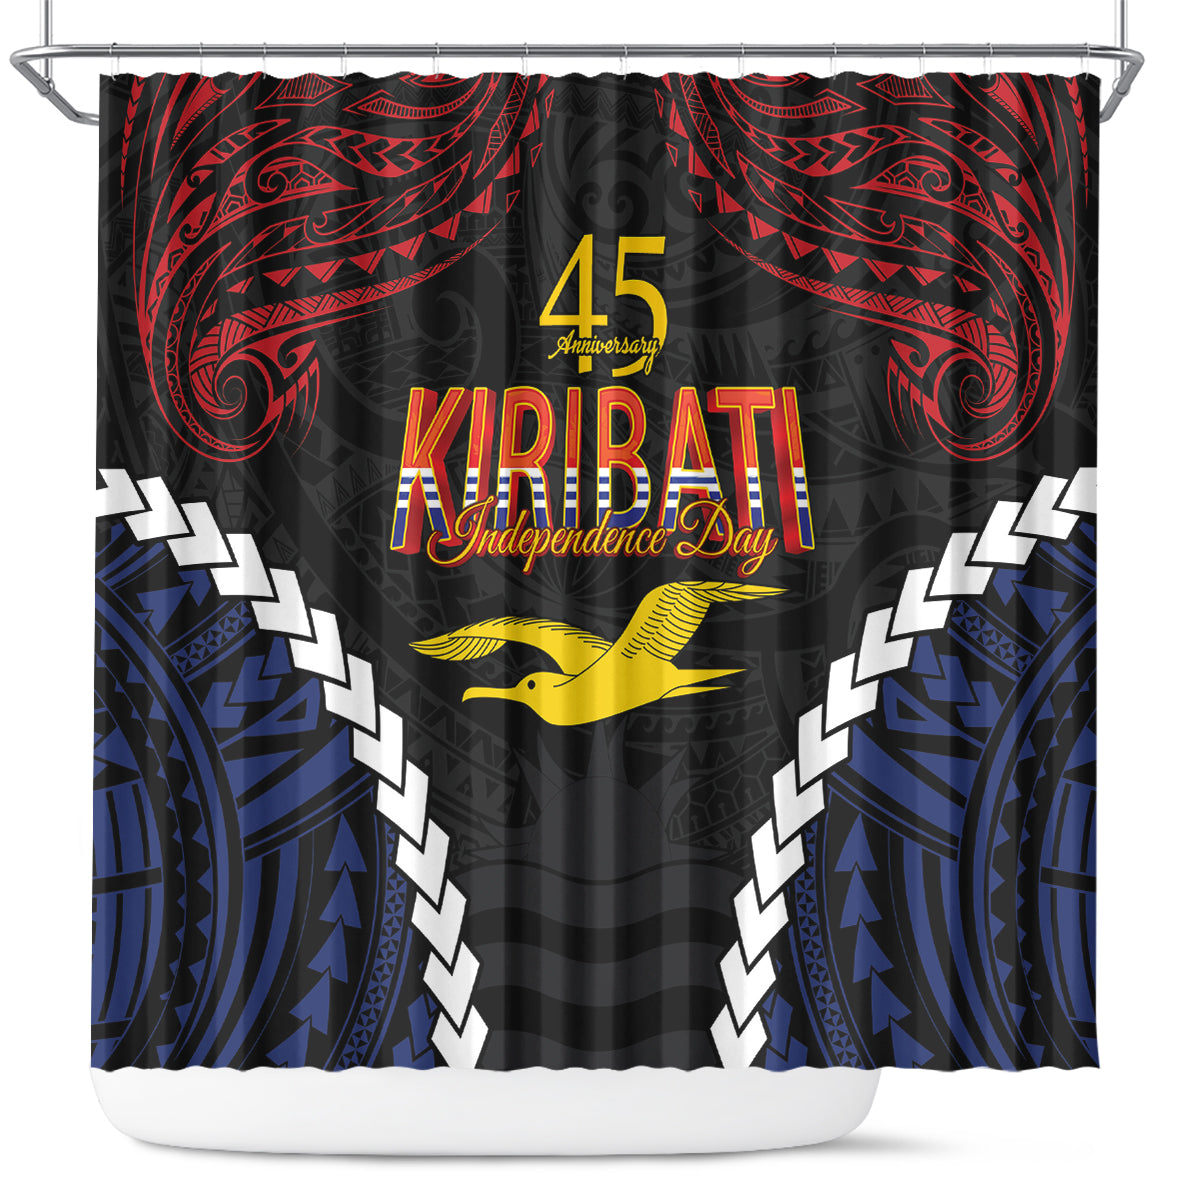 Kiribati 45th Anniversary Independence Day Shower Curtain Since 1979